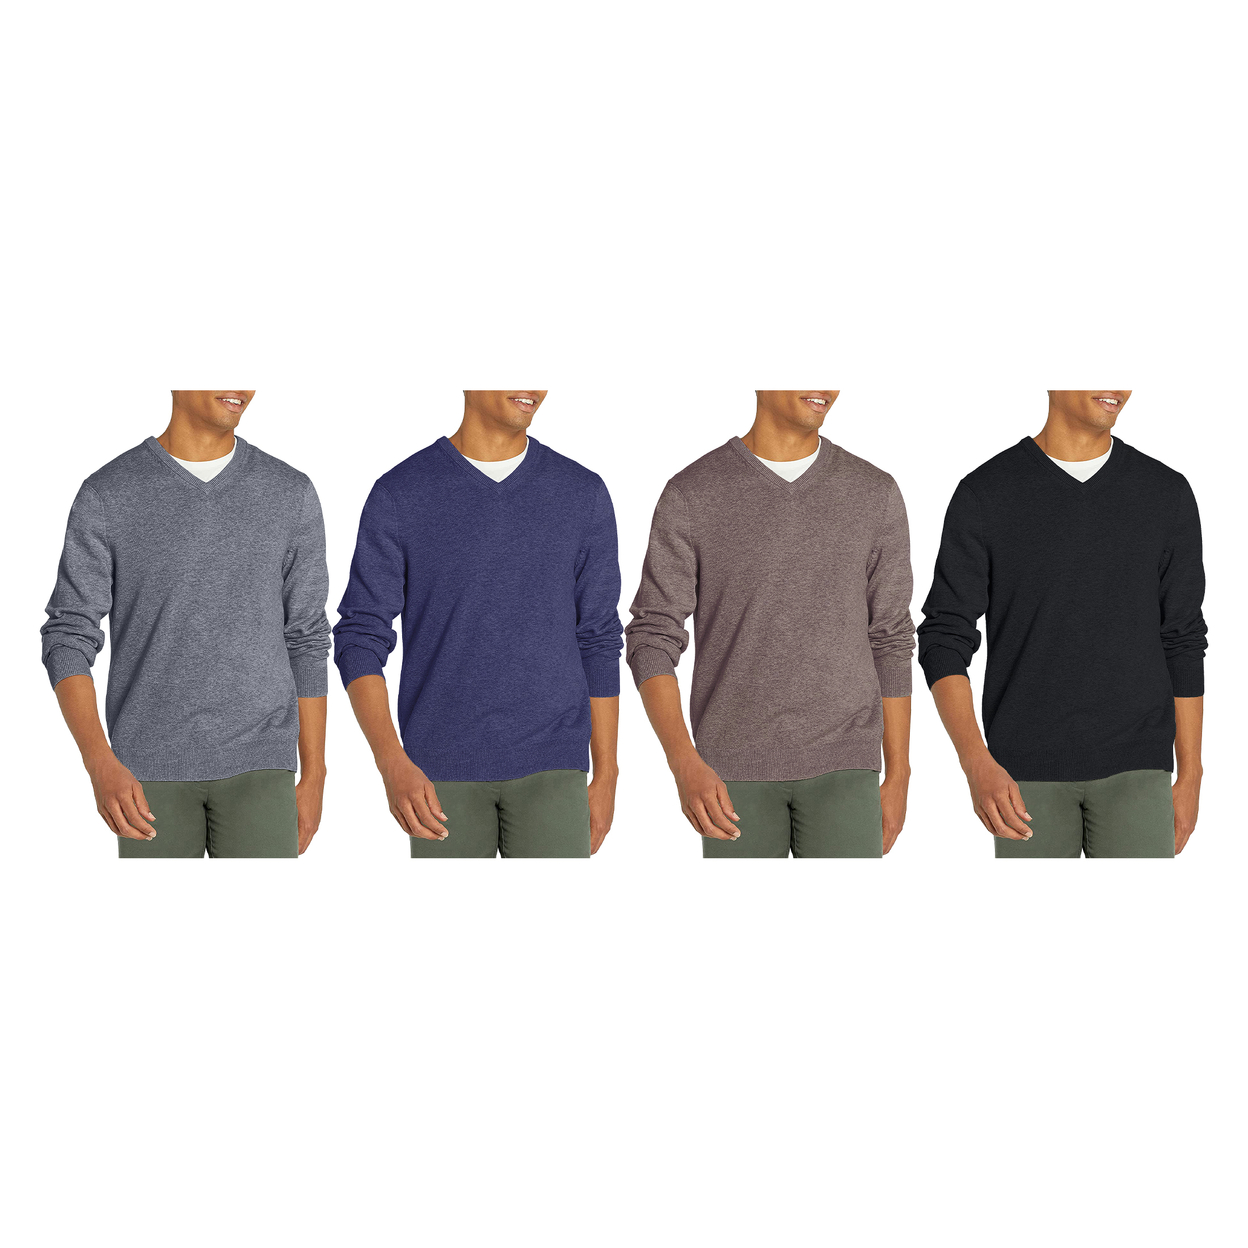 2-Pack: Men's Casual Ultra Soft Slim Fit Warm Knit V-Neck Sweater - Black & Blue, Medium